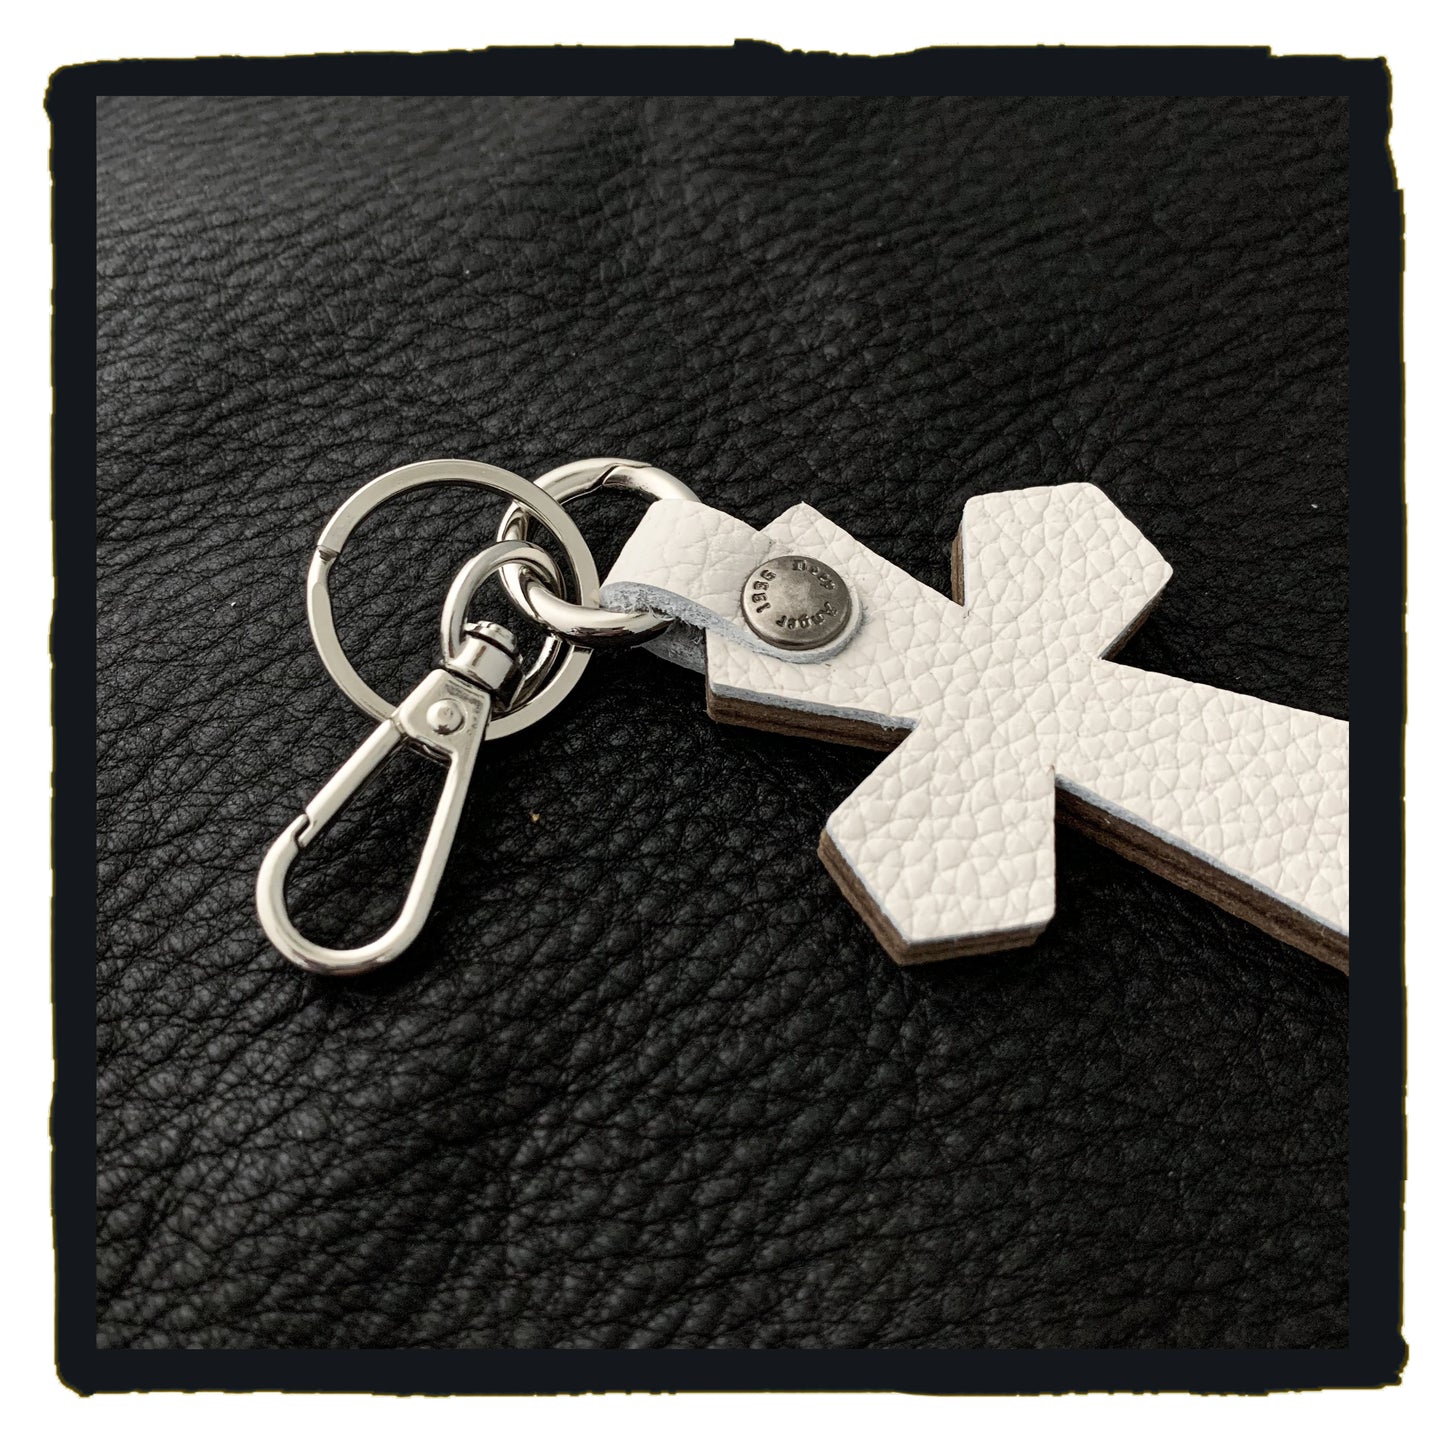 20-C003b1c leather cross charms #1